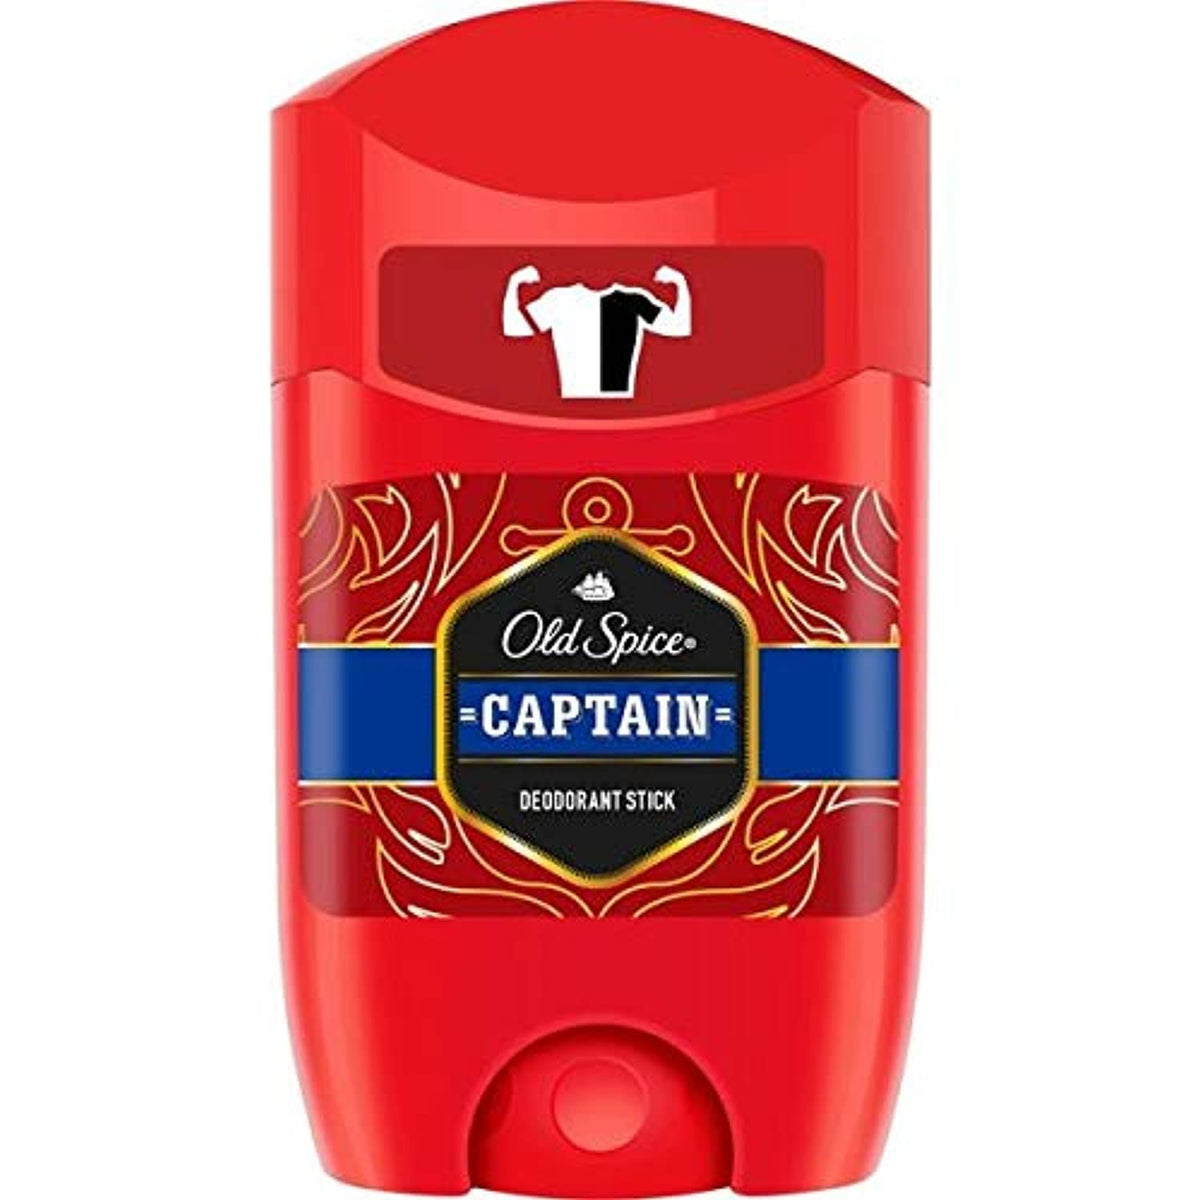 Old Spice Captain Deodorant Stick For Men - 50gm